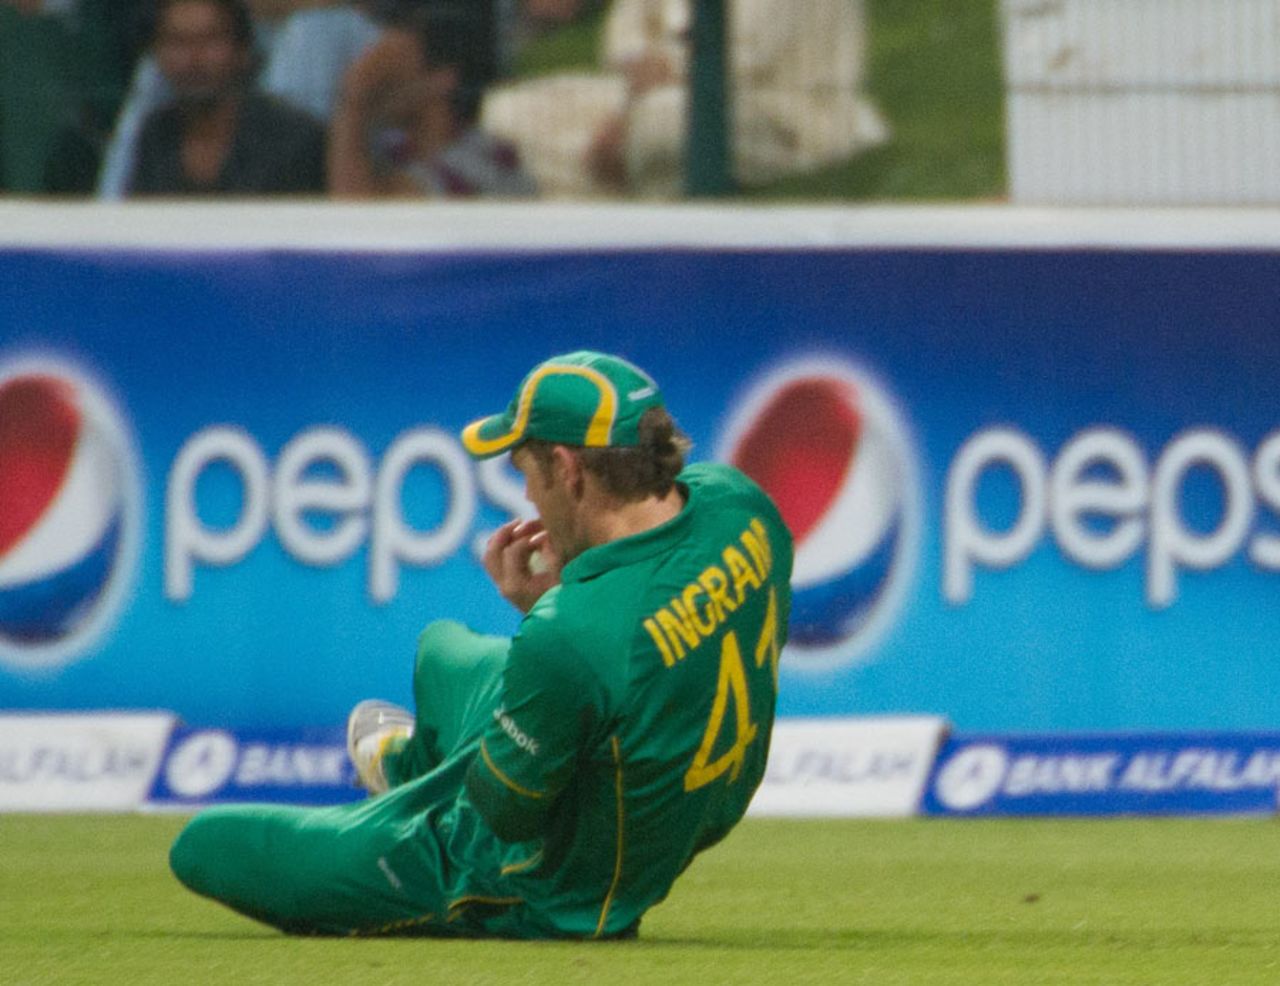 Colin Ingram completes the catch to dismiss Mohammad Hafeez, Pakistan v South Africa, 1st Twenty20, Abu Dhabi, October 26, 2010